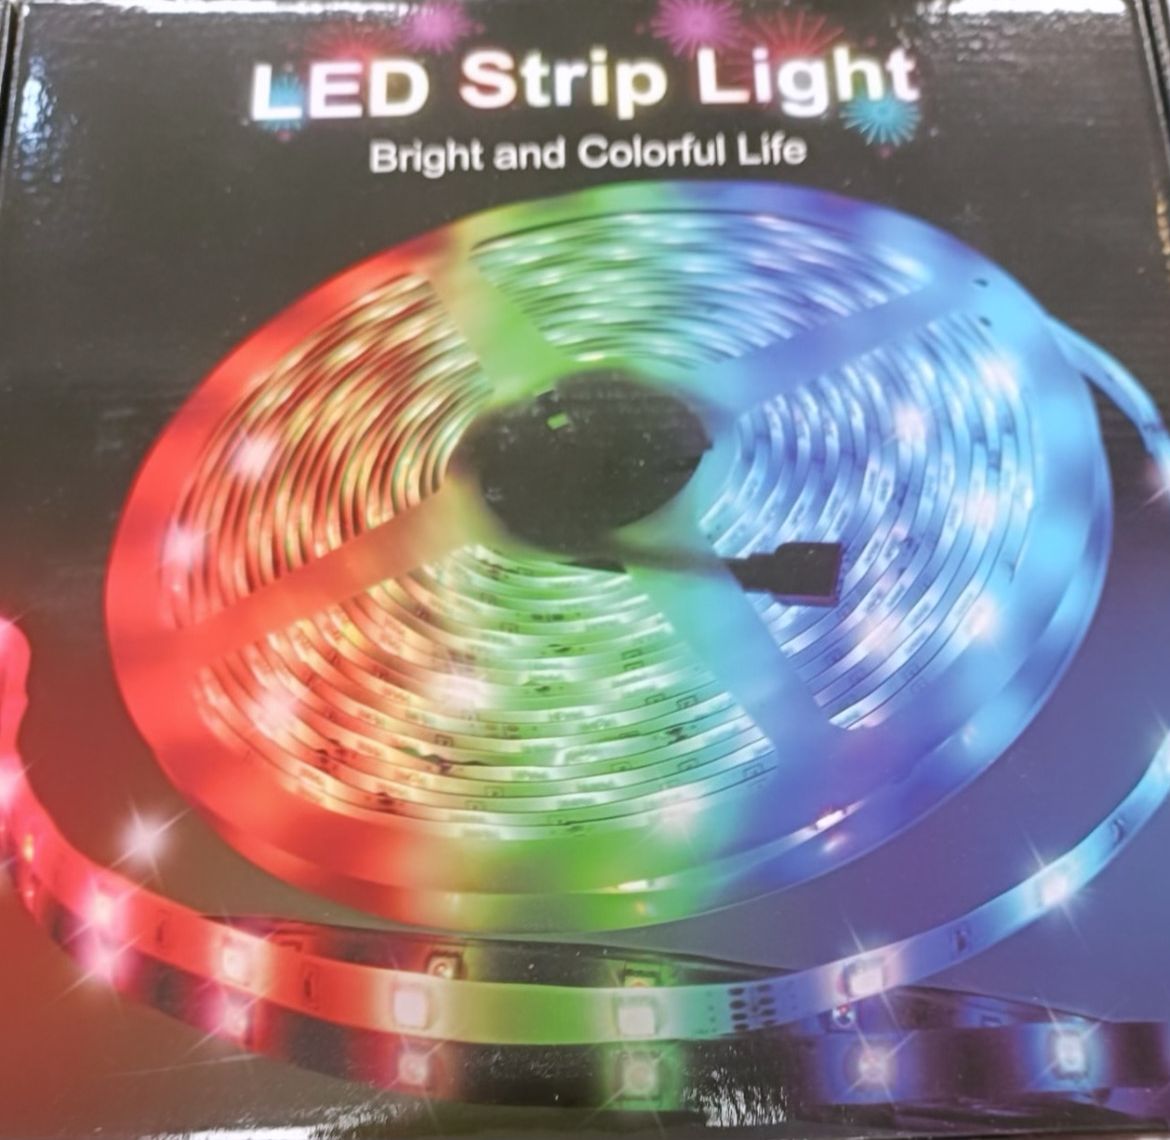 Multi-Color LED Strip Light Kit With Remote!